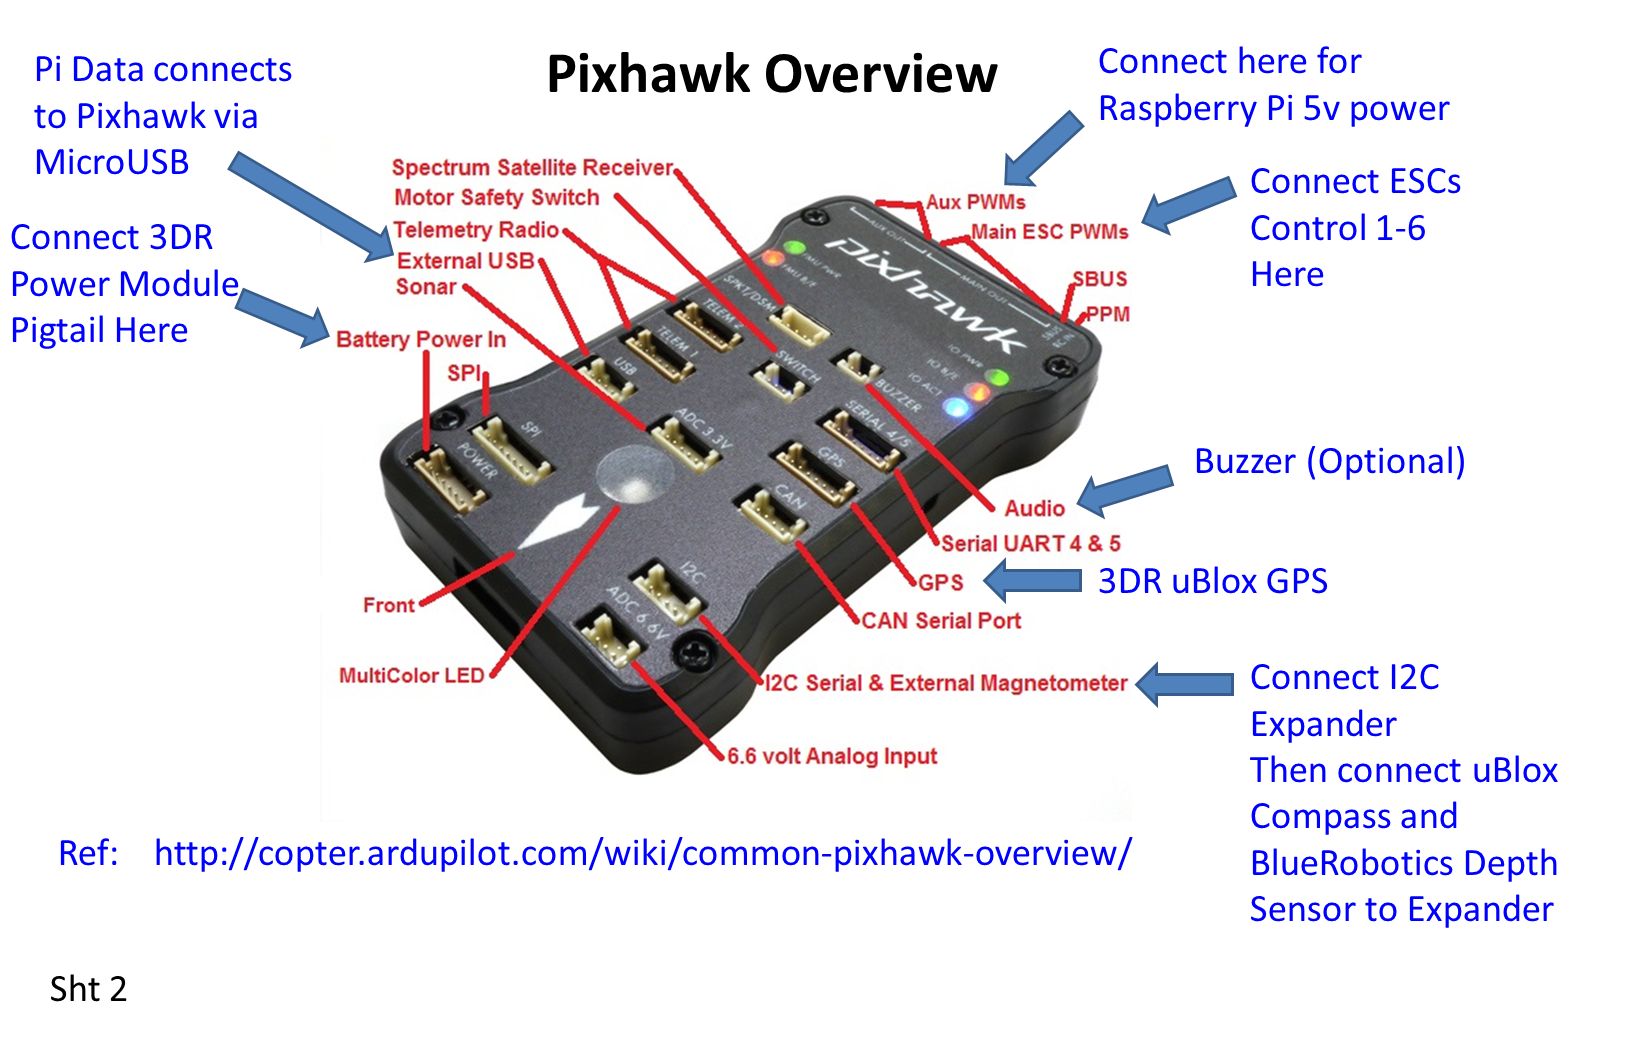 Connector connecting. Схема подключения Pixhawk 4. Схема Pixhawk 2.4.8. Pixhawk 2.4.8 GPS pinout. Pixhawk GPS pinout.